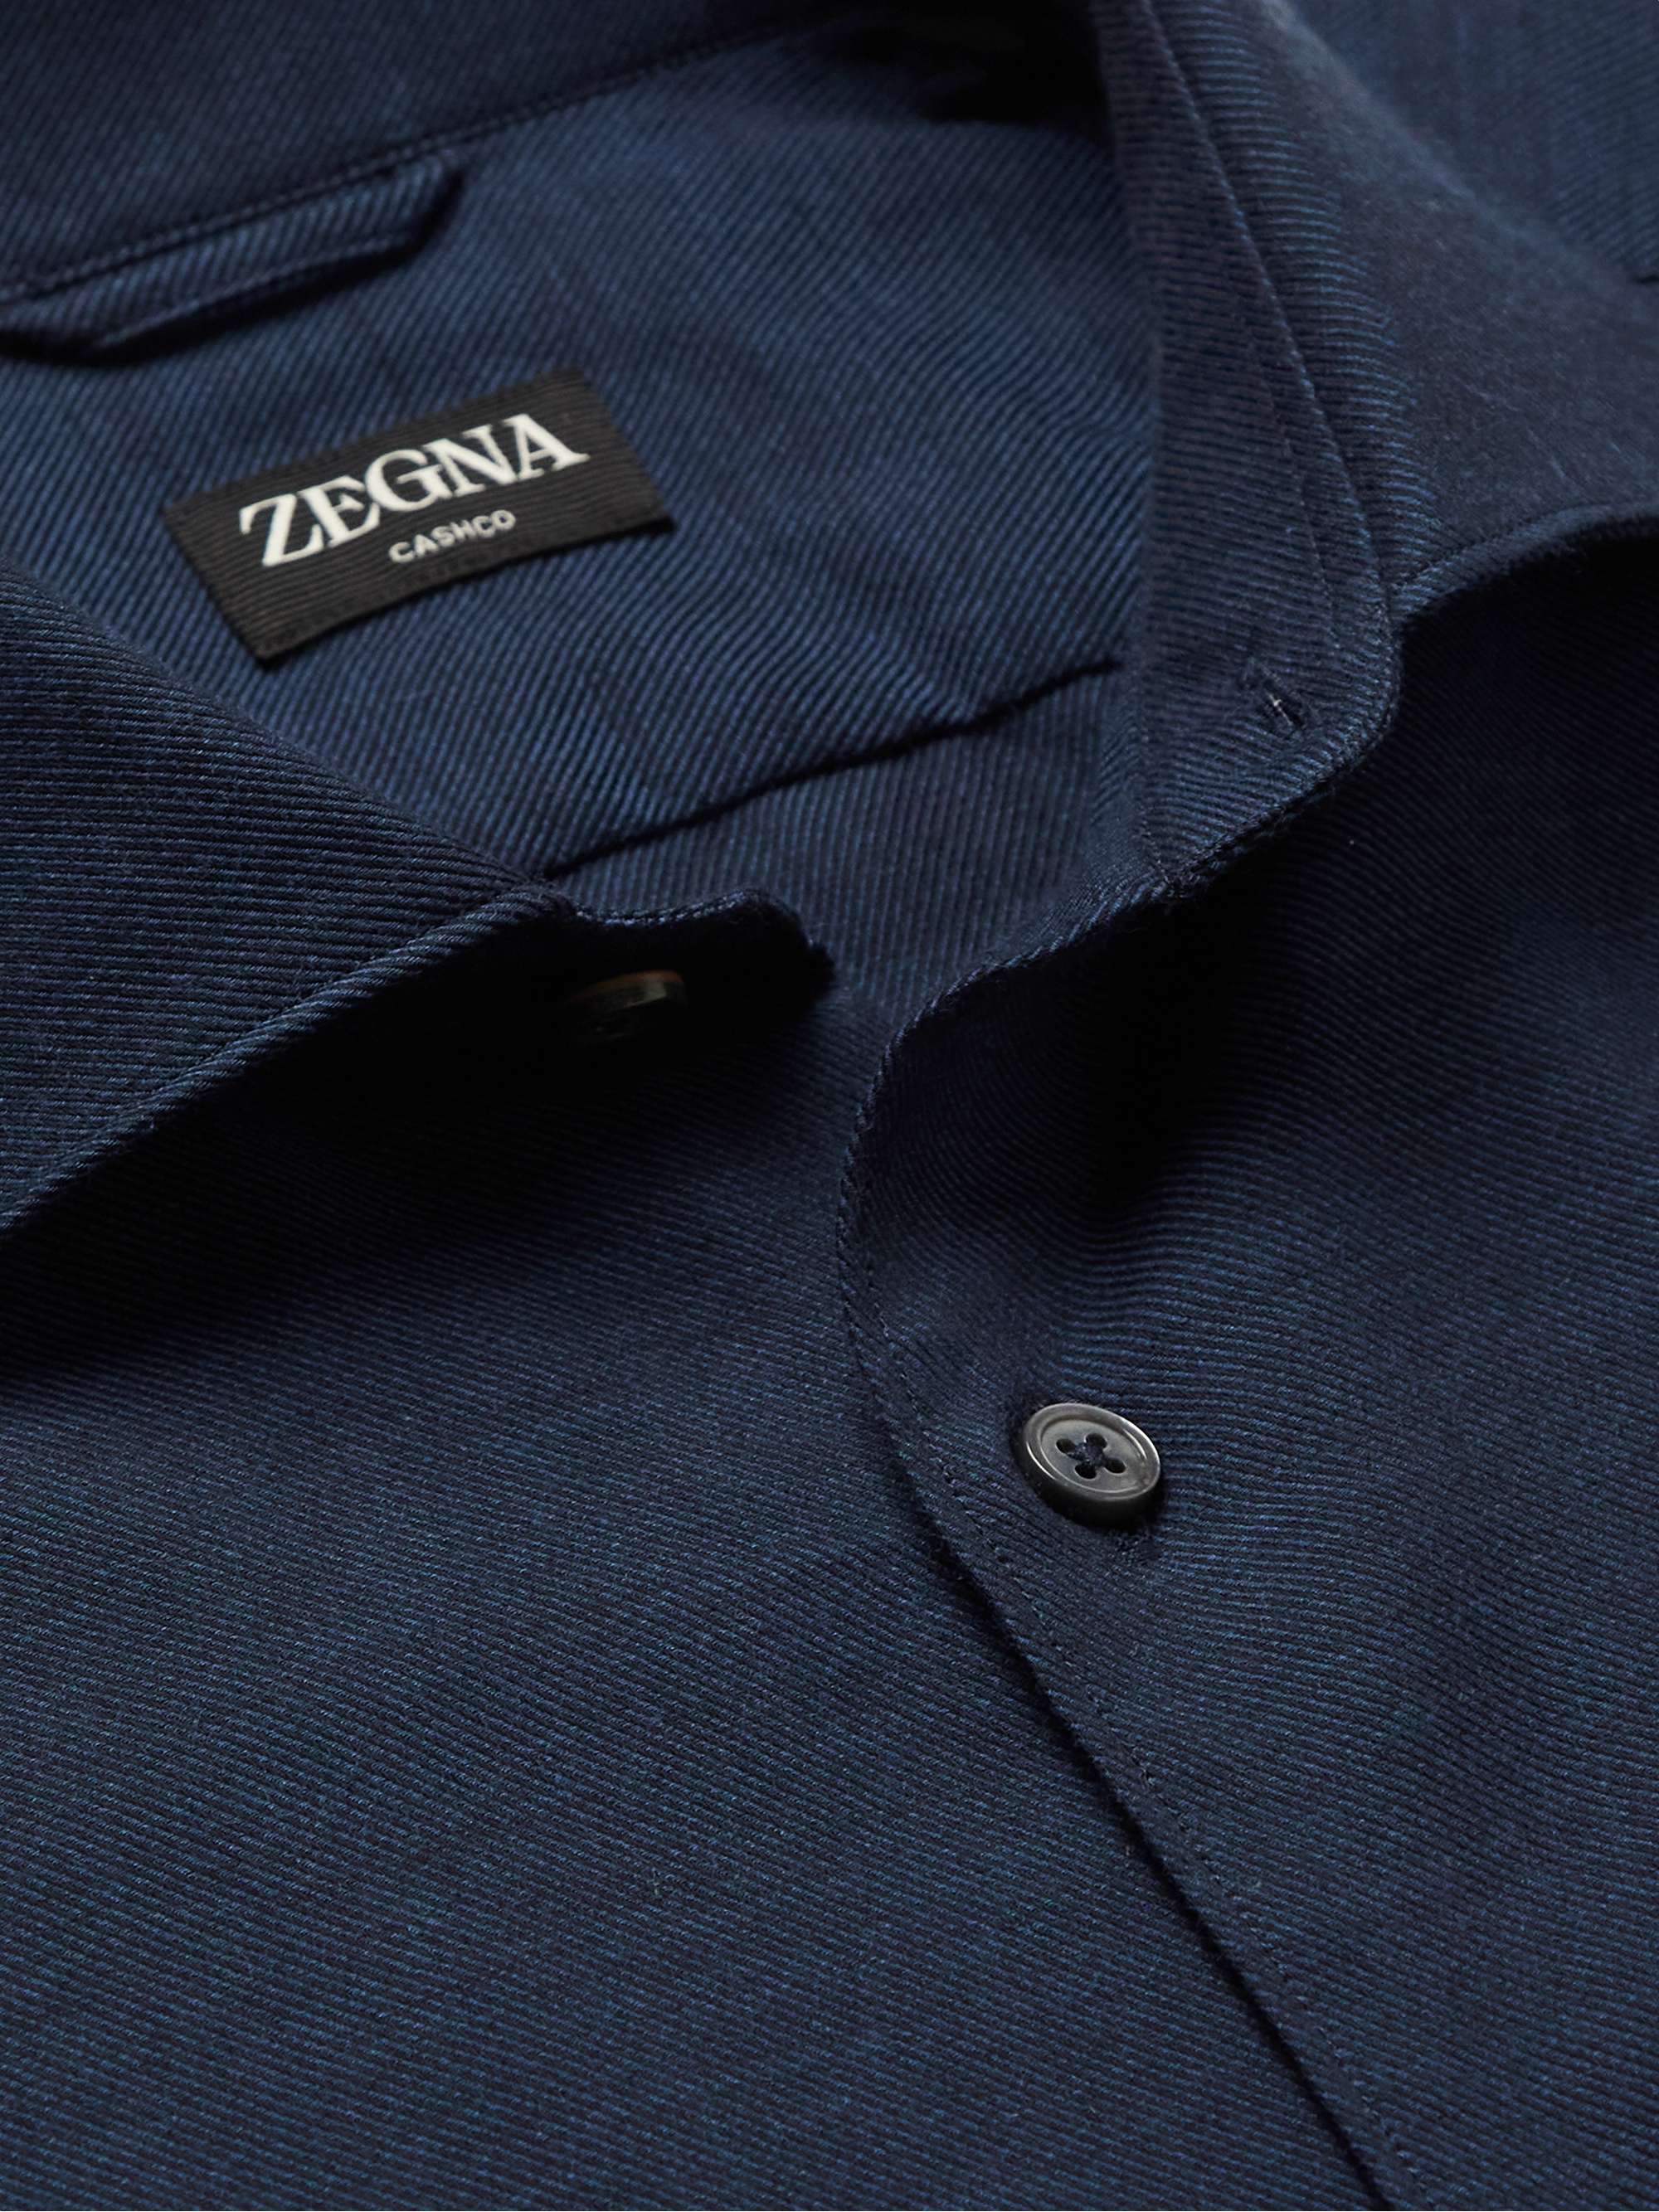 ZEGNA Slim-Fit Cotton and Cashmere-Blend Shirt